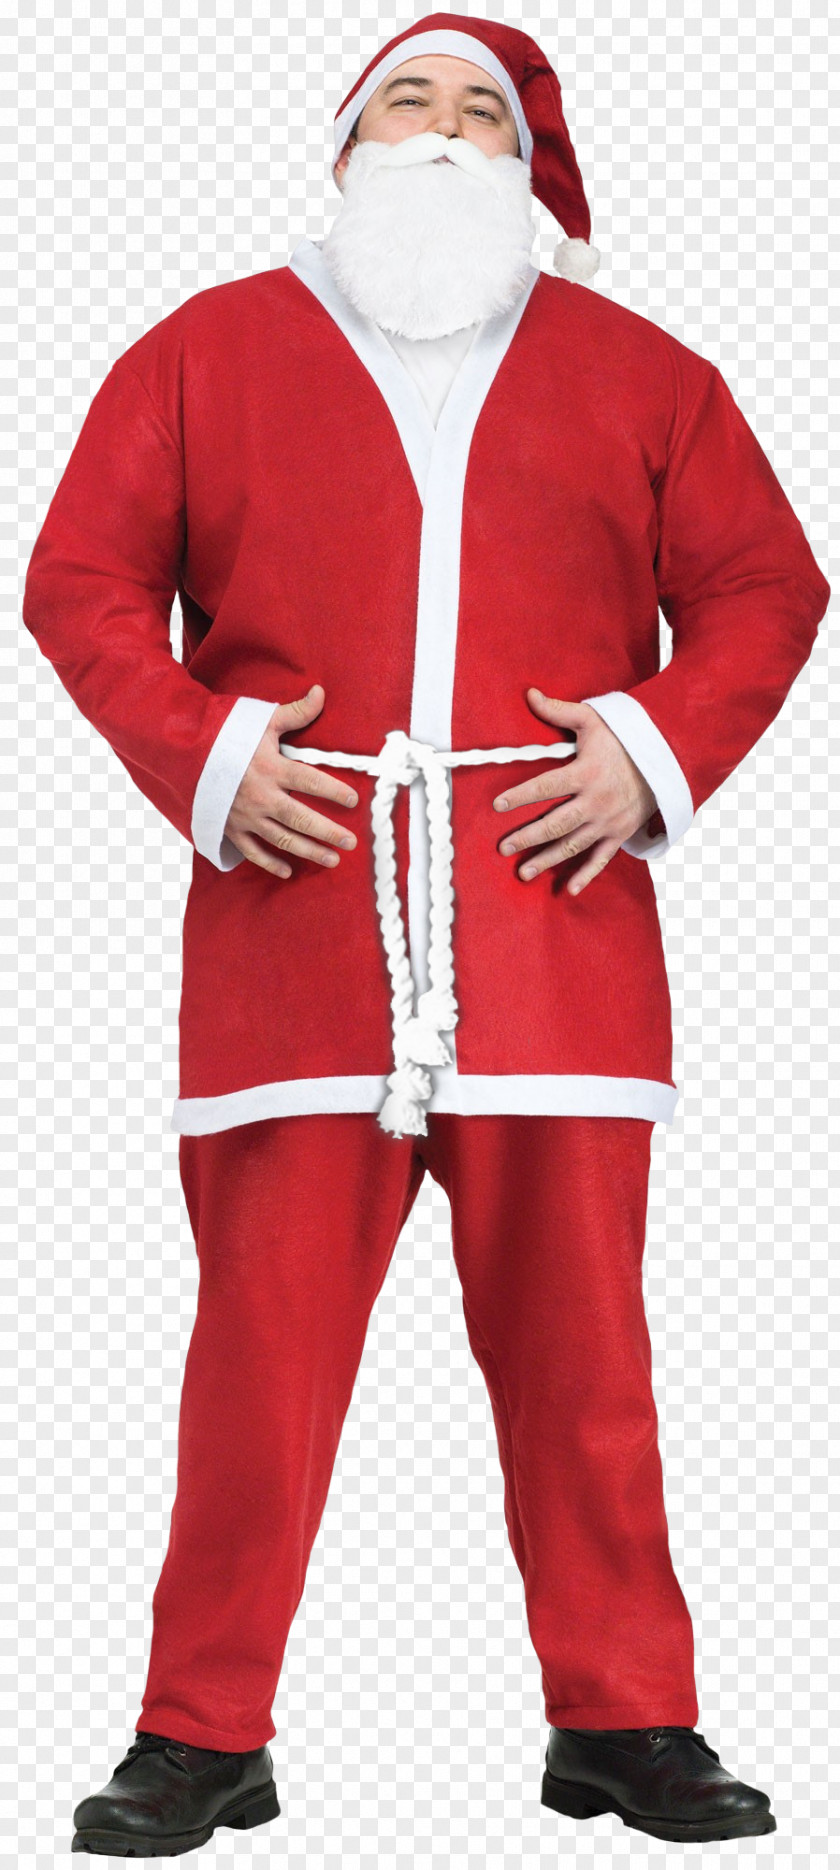 Santa Claus Costume Suit Clothing PNG